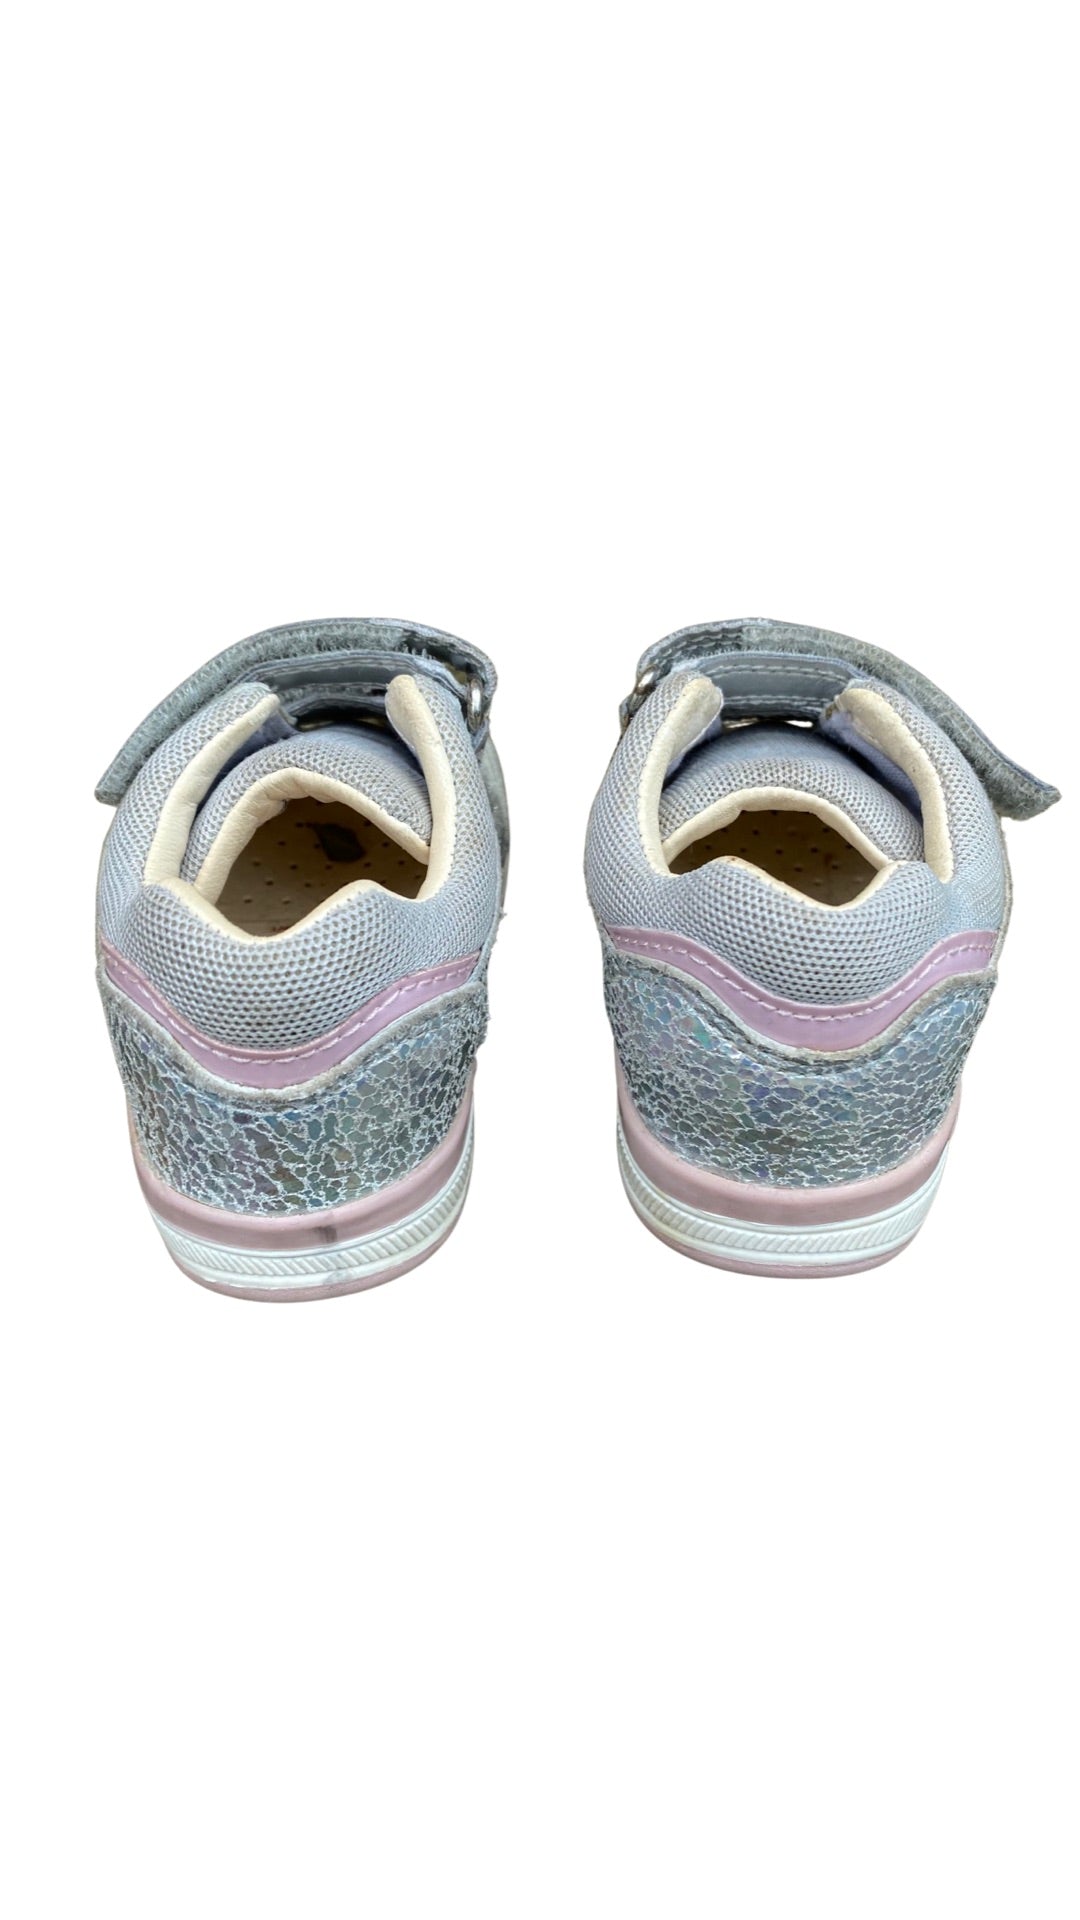 Geox glitter infant double strap trainers (UK4/EU20)